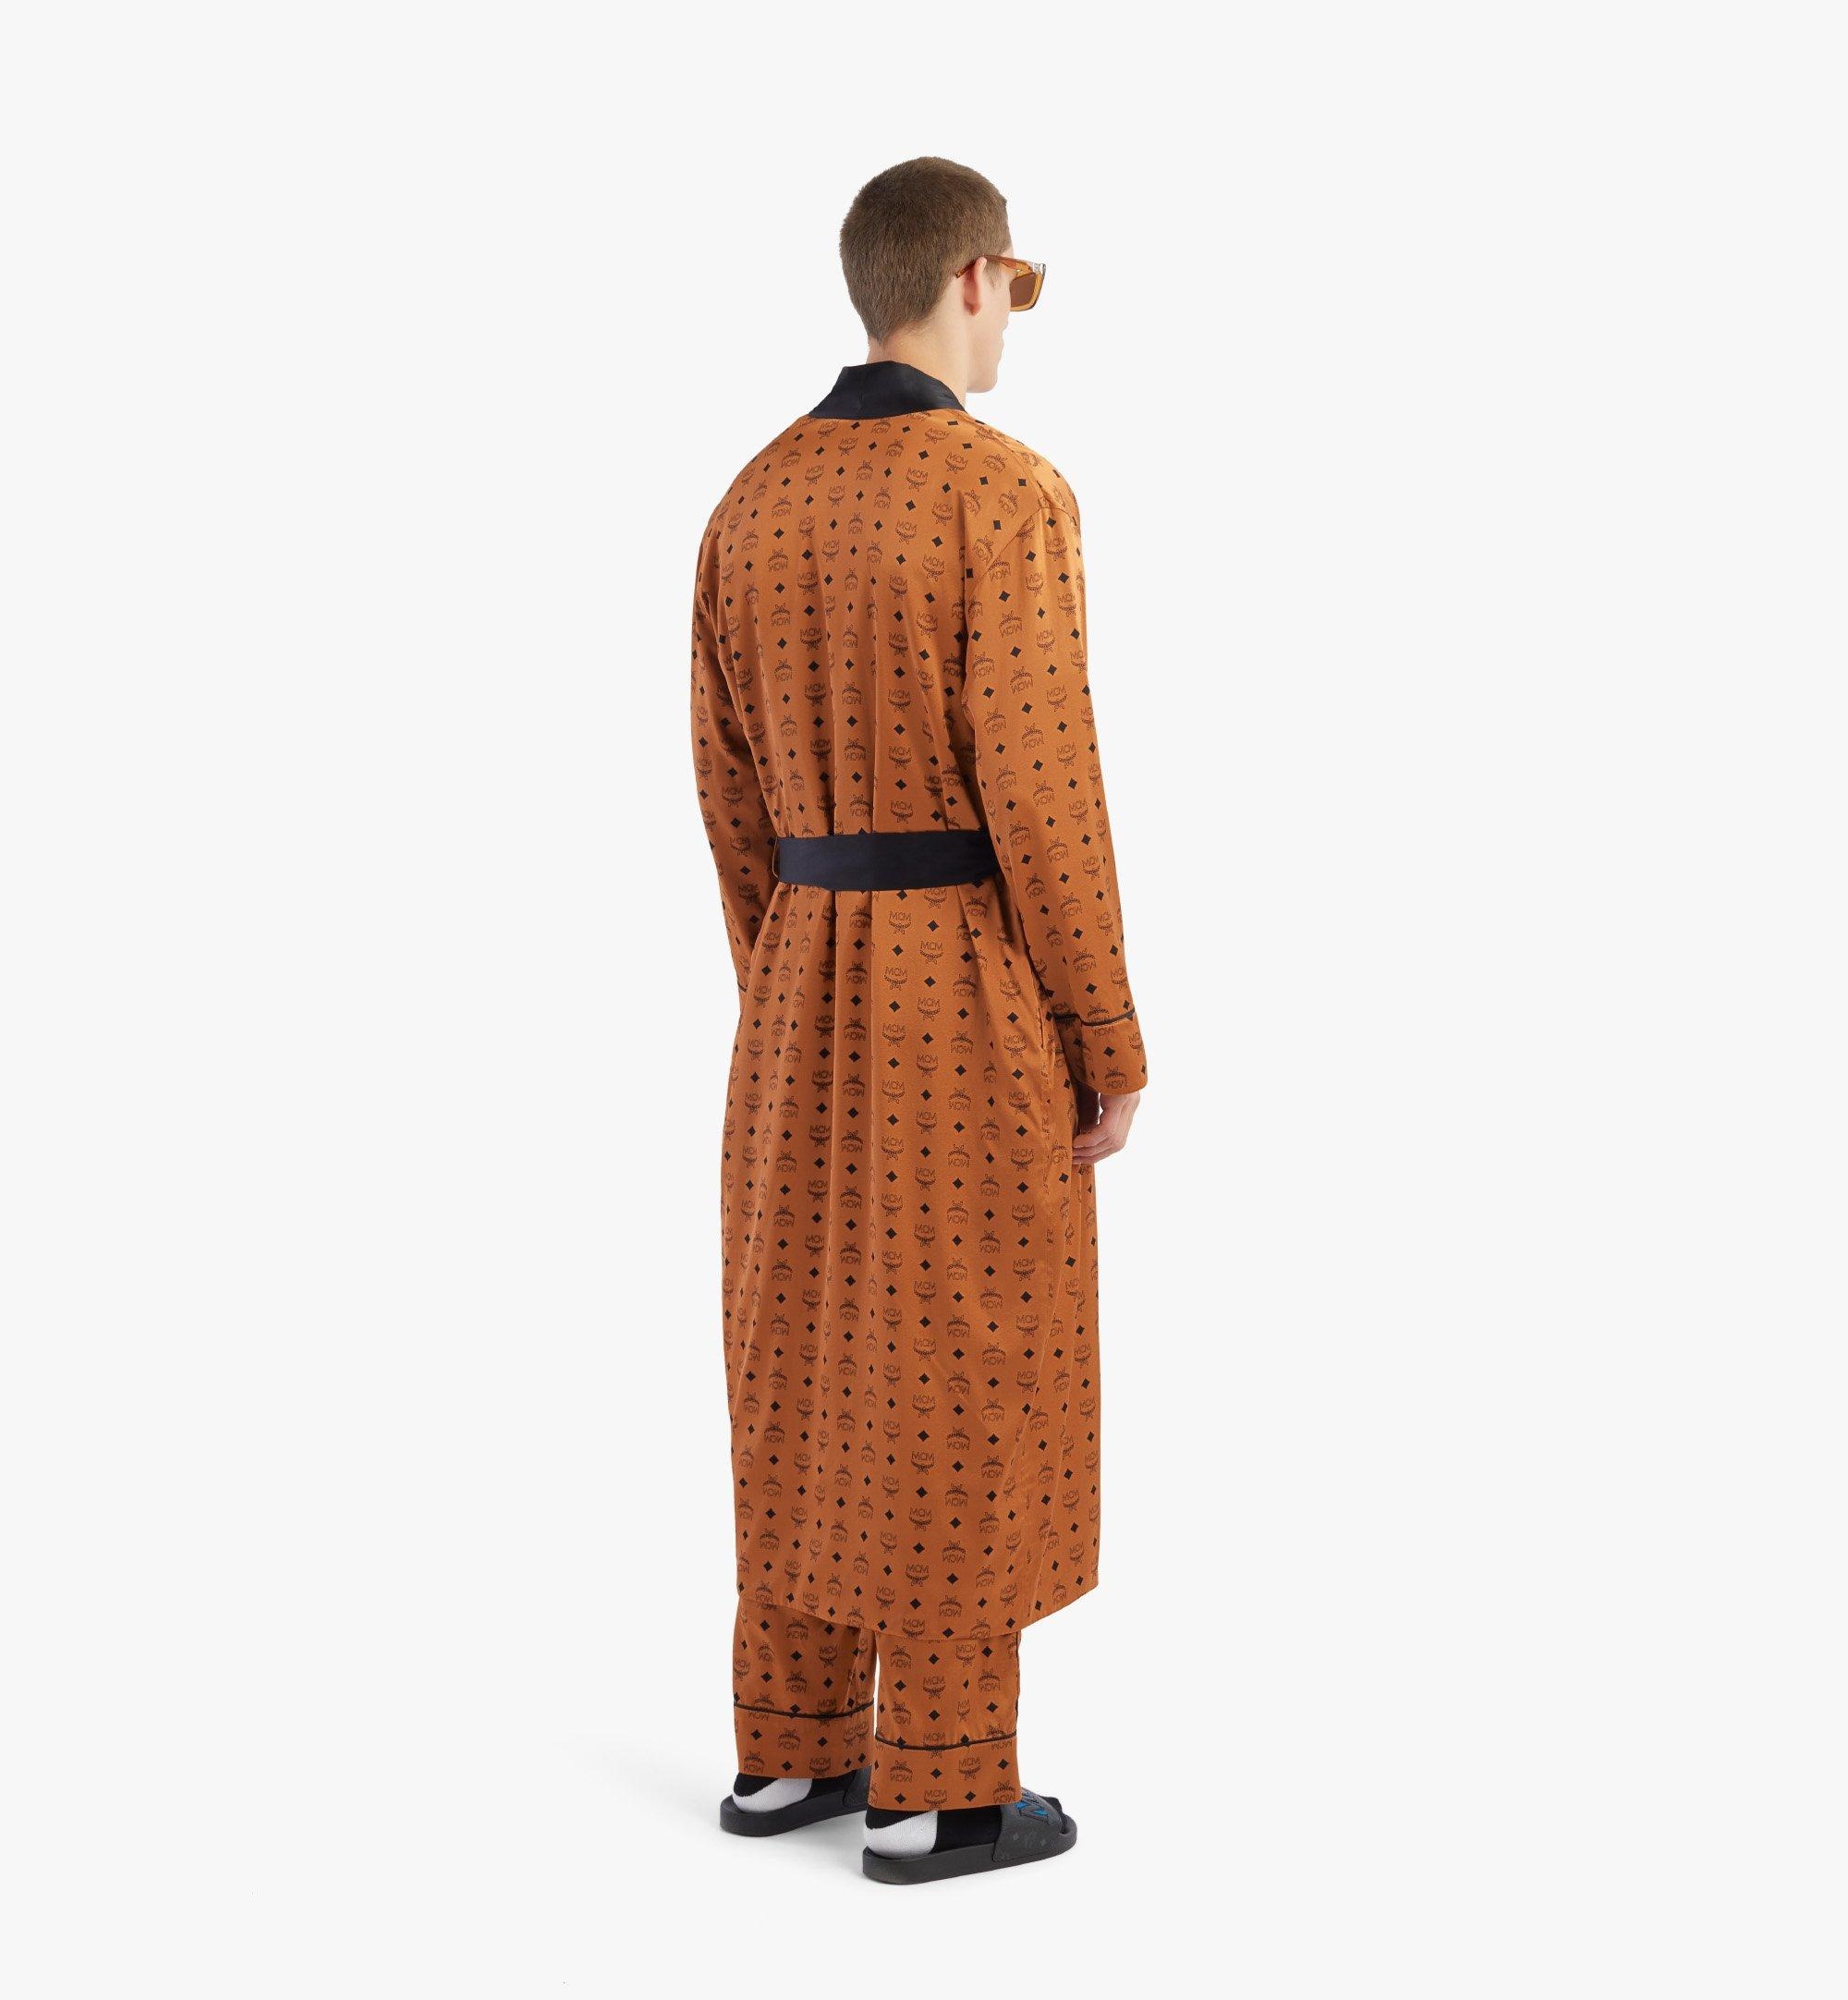 MCM Reversible bathrobe, Men's Clothing